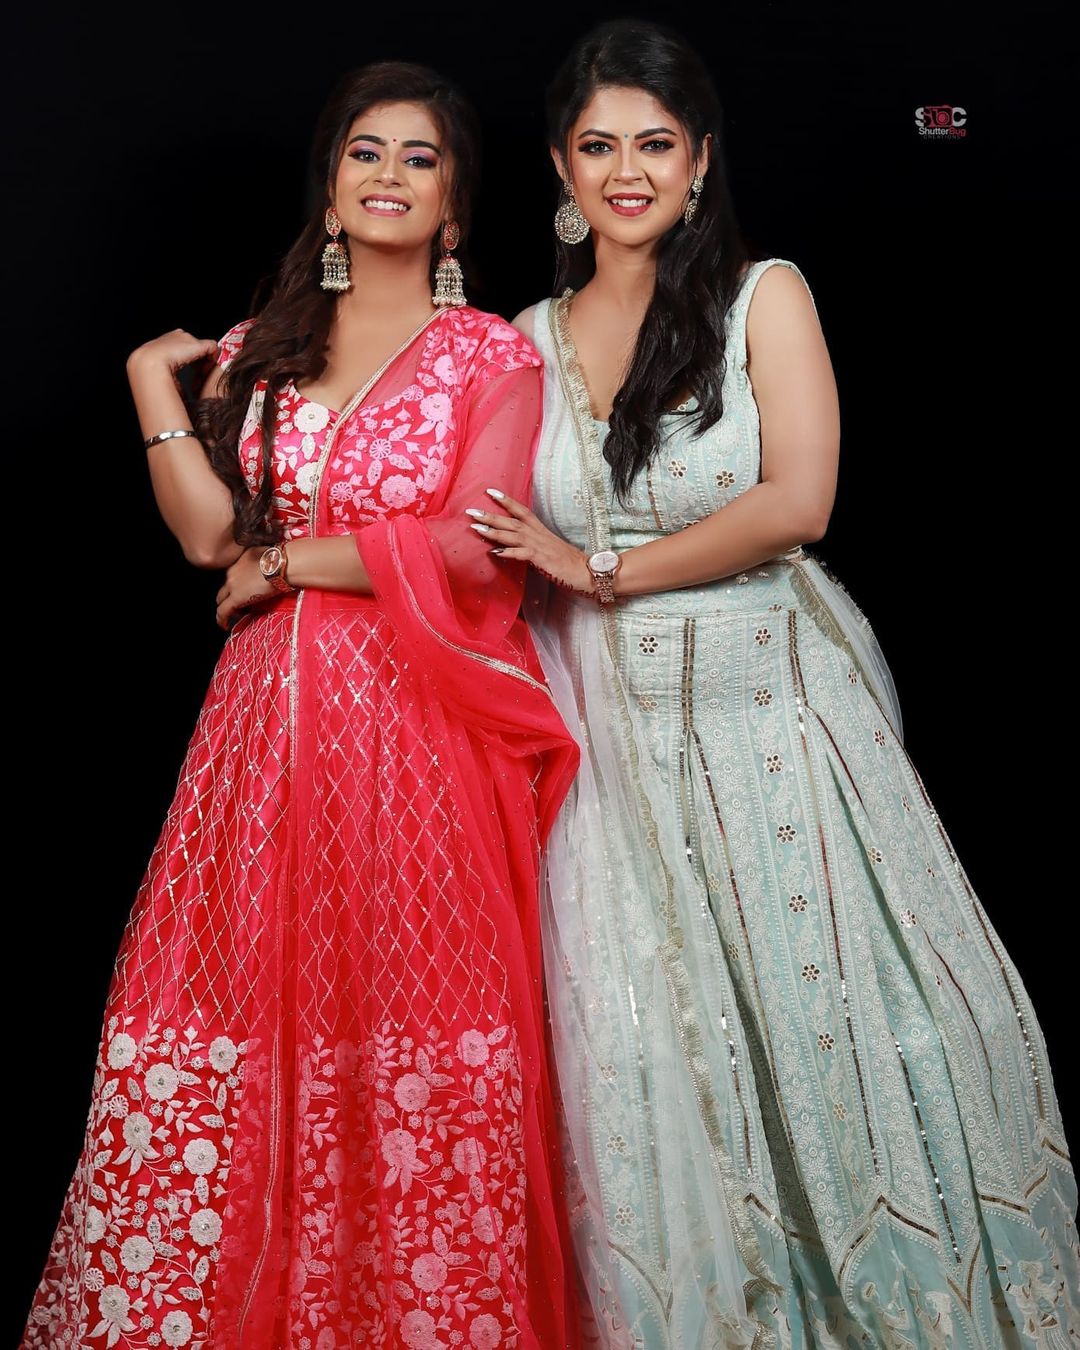 Actress Mansi Joshi with her Sister